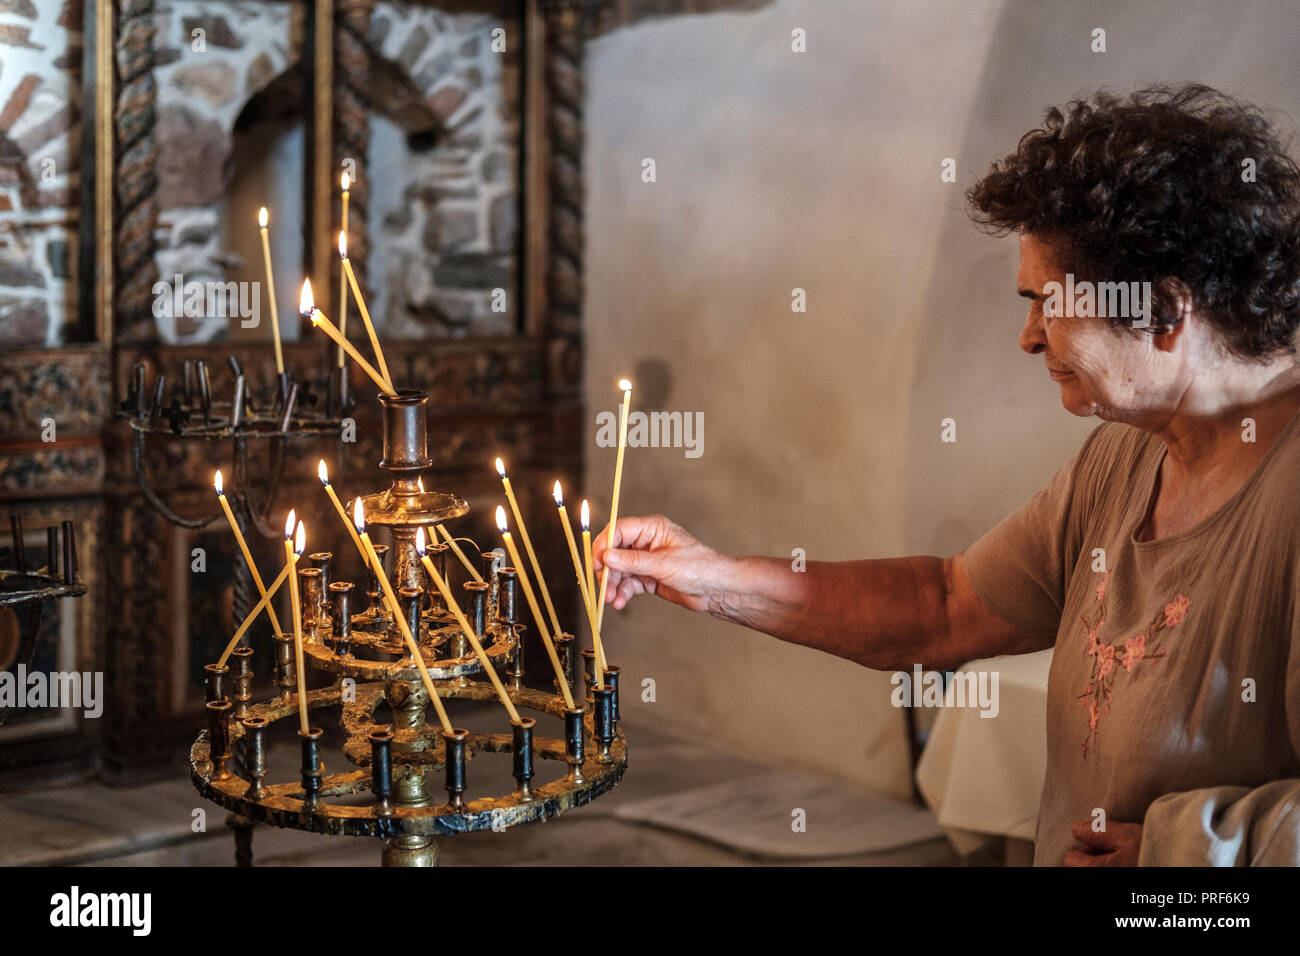 Senior Mujer encendiendo una vela en la iglesia ortodoxa. Foto de stock